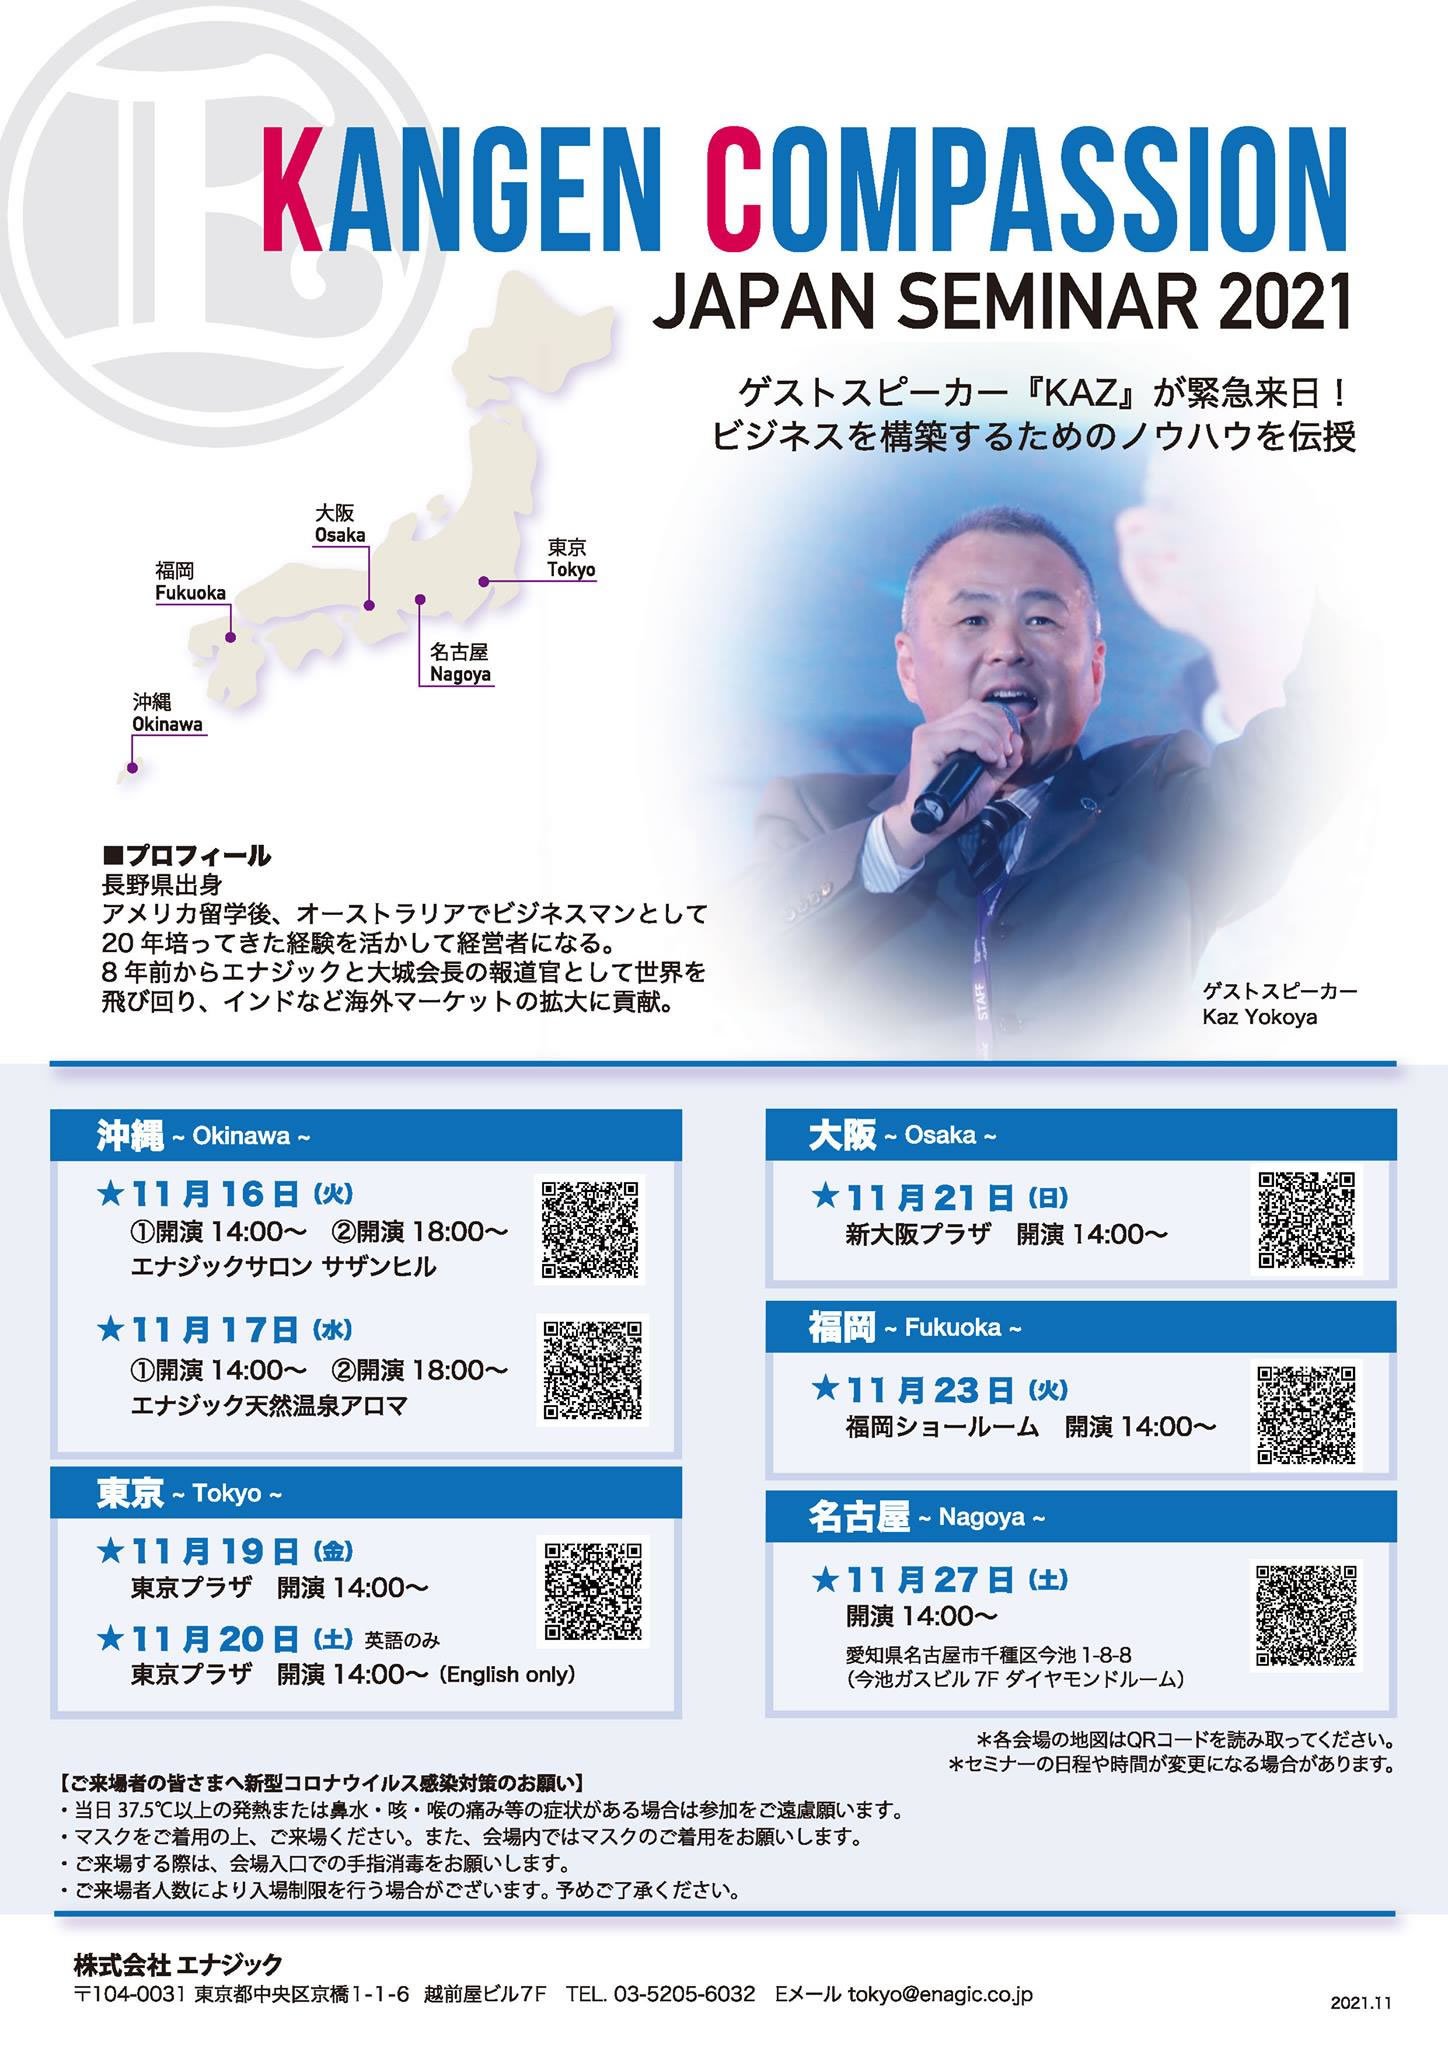 Japan Seminar 2021